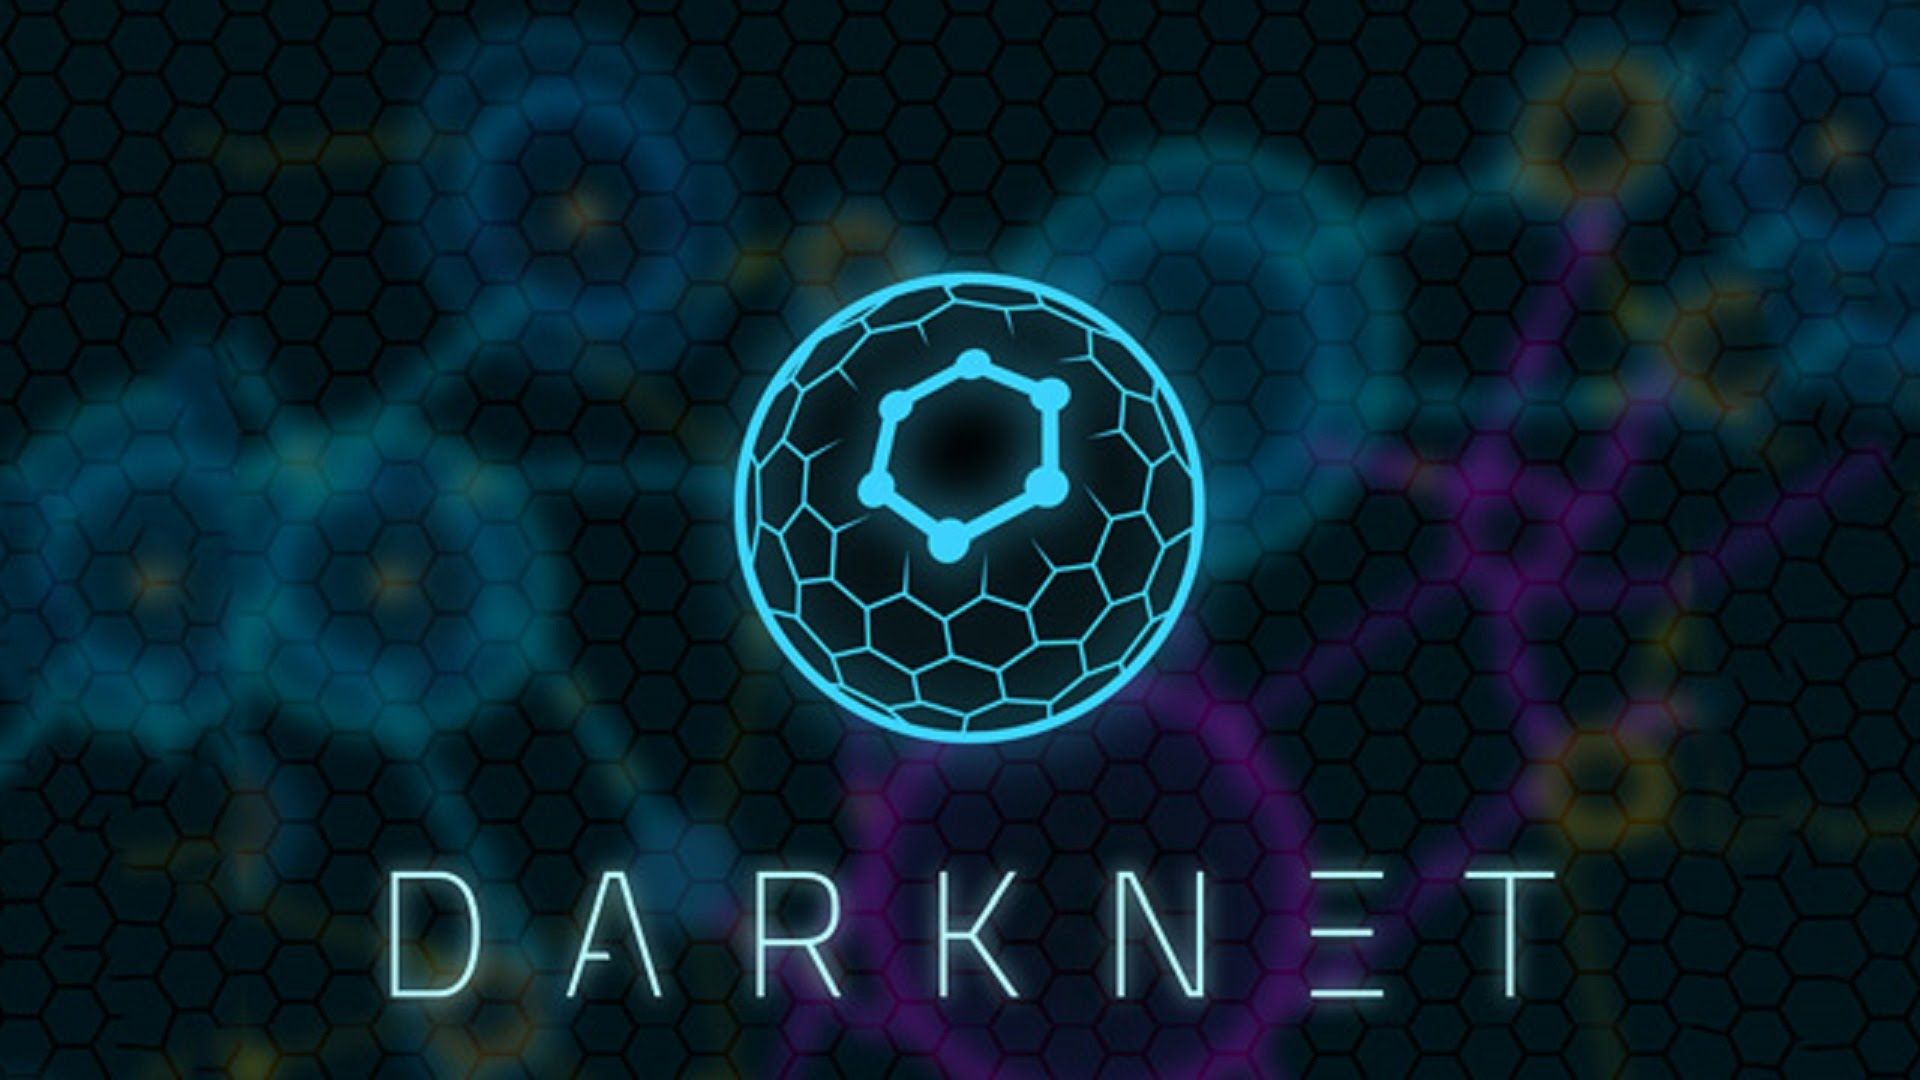 The Darknet Market Reddit